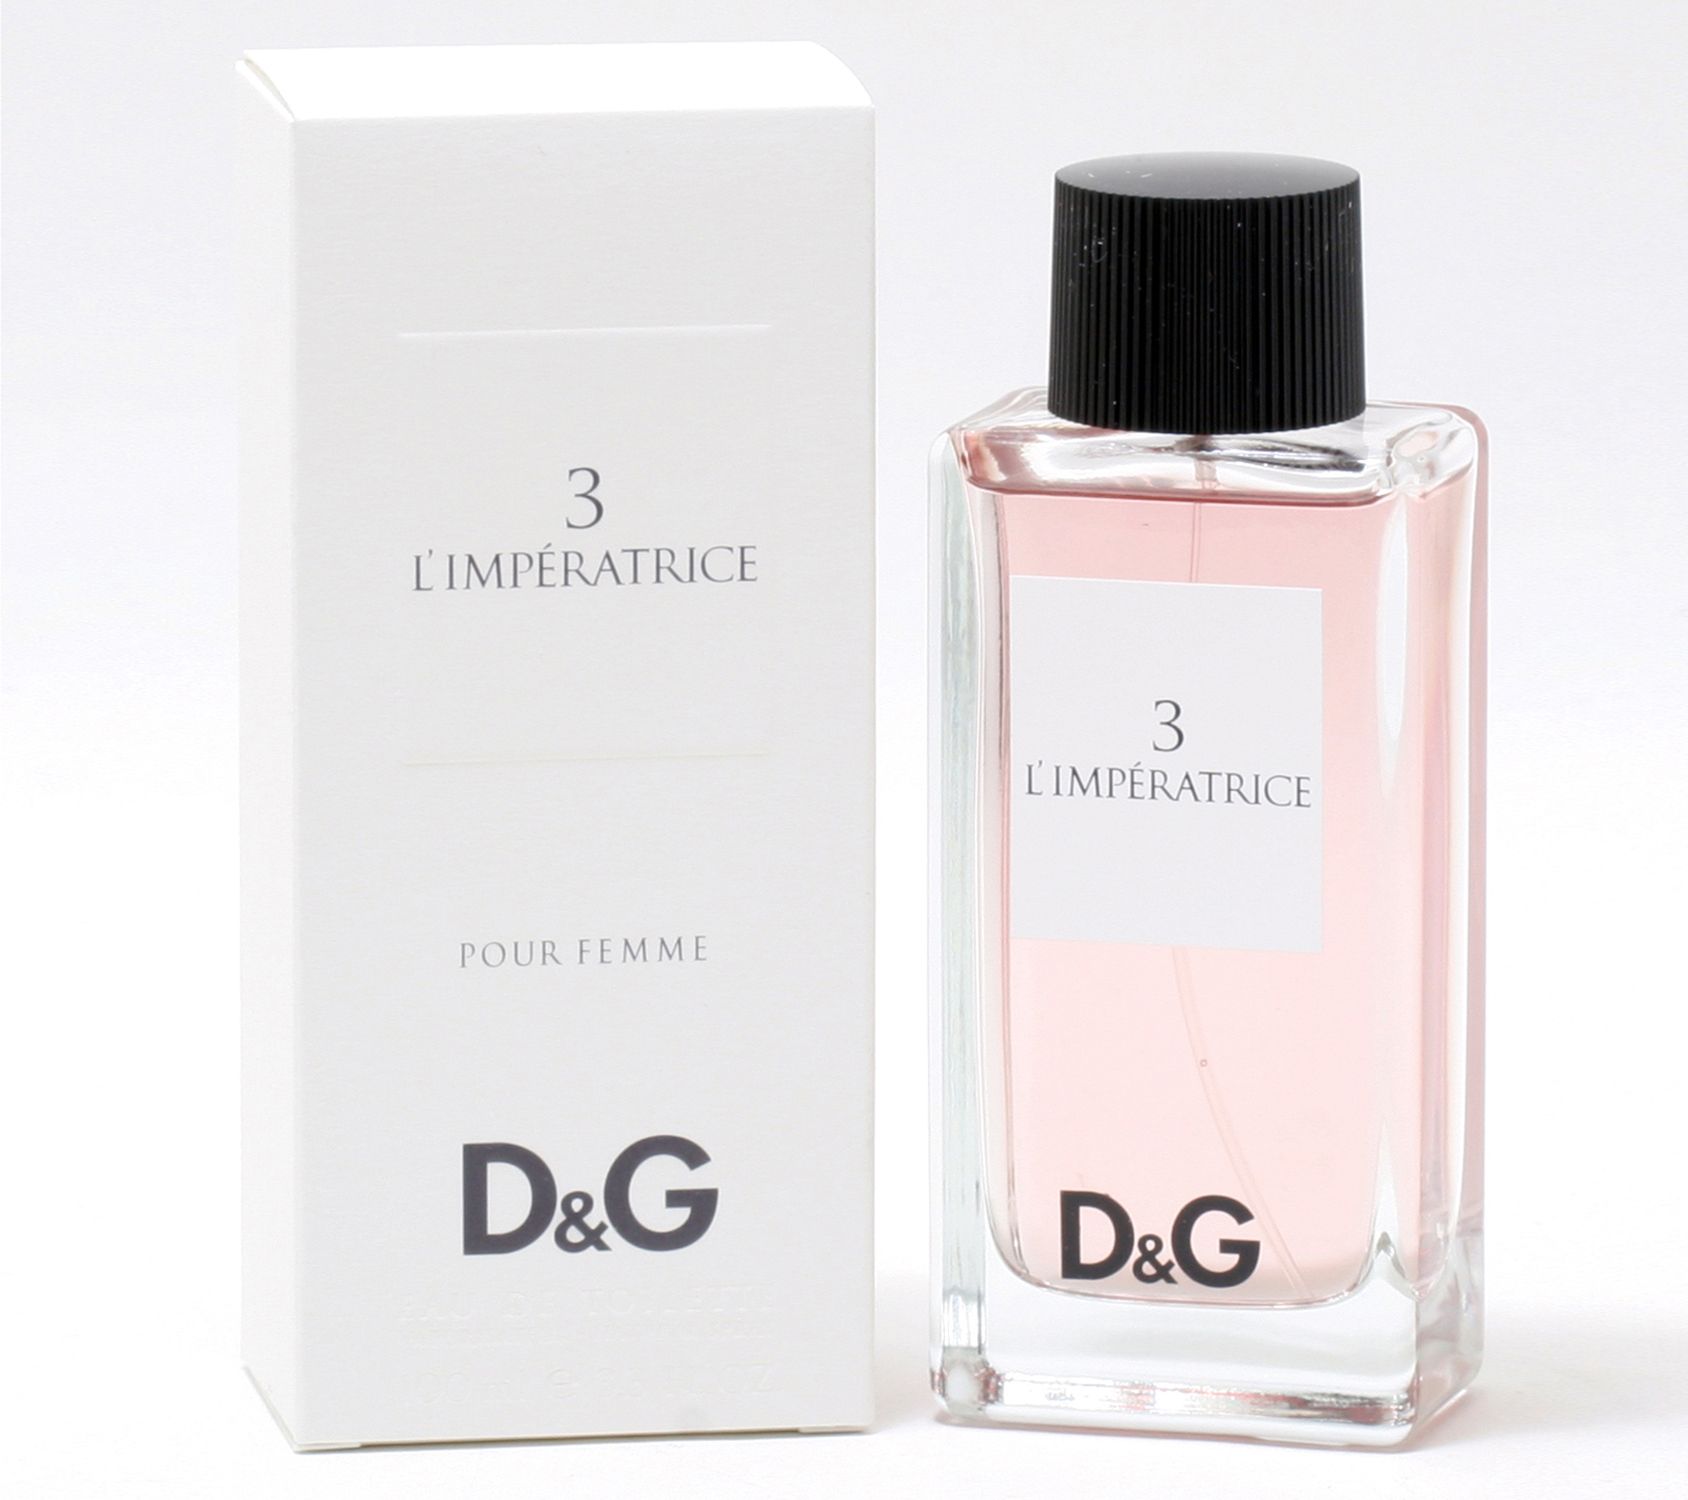 Paty Parfumerie - DOLCE GABBANA THE ONE FEMININO EAU DE TOILETTE 100ML